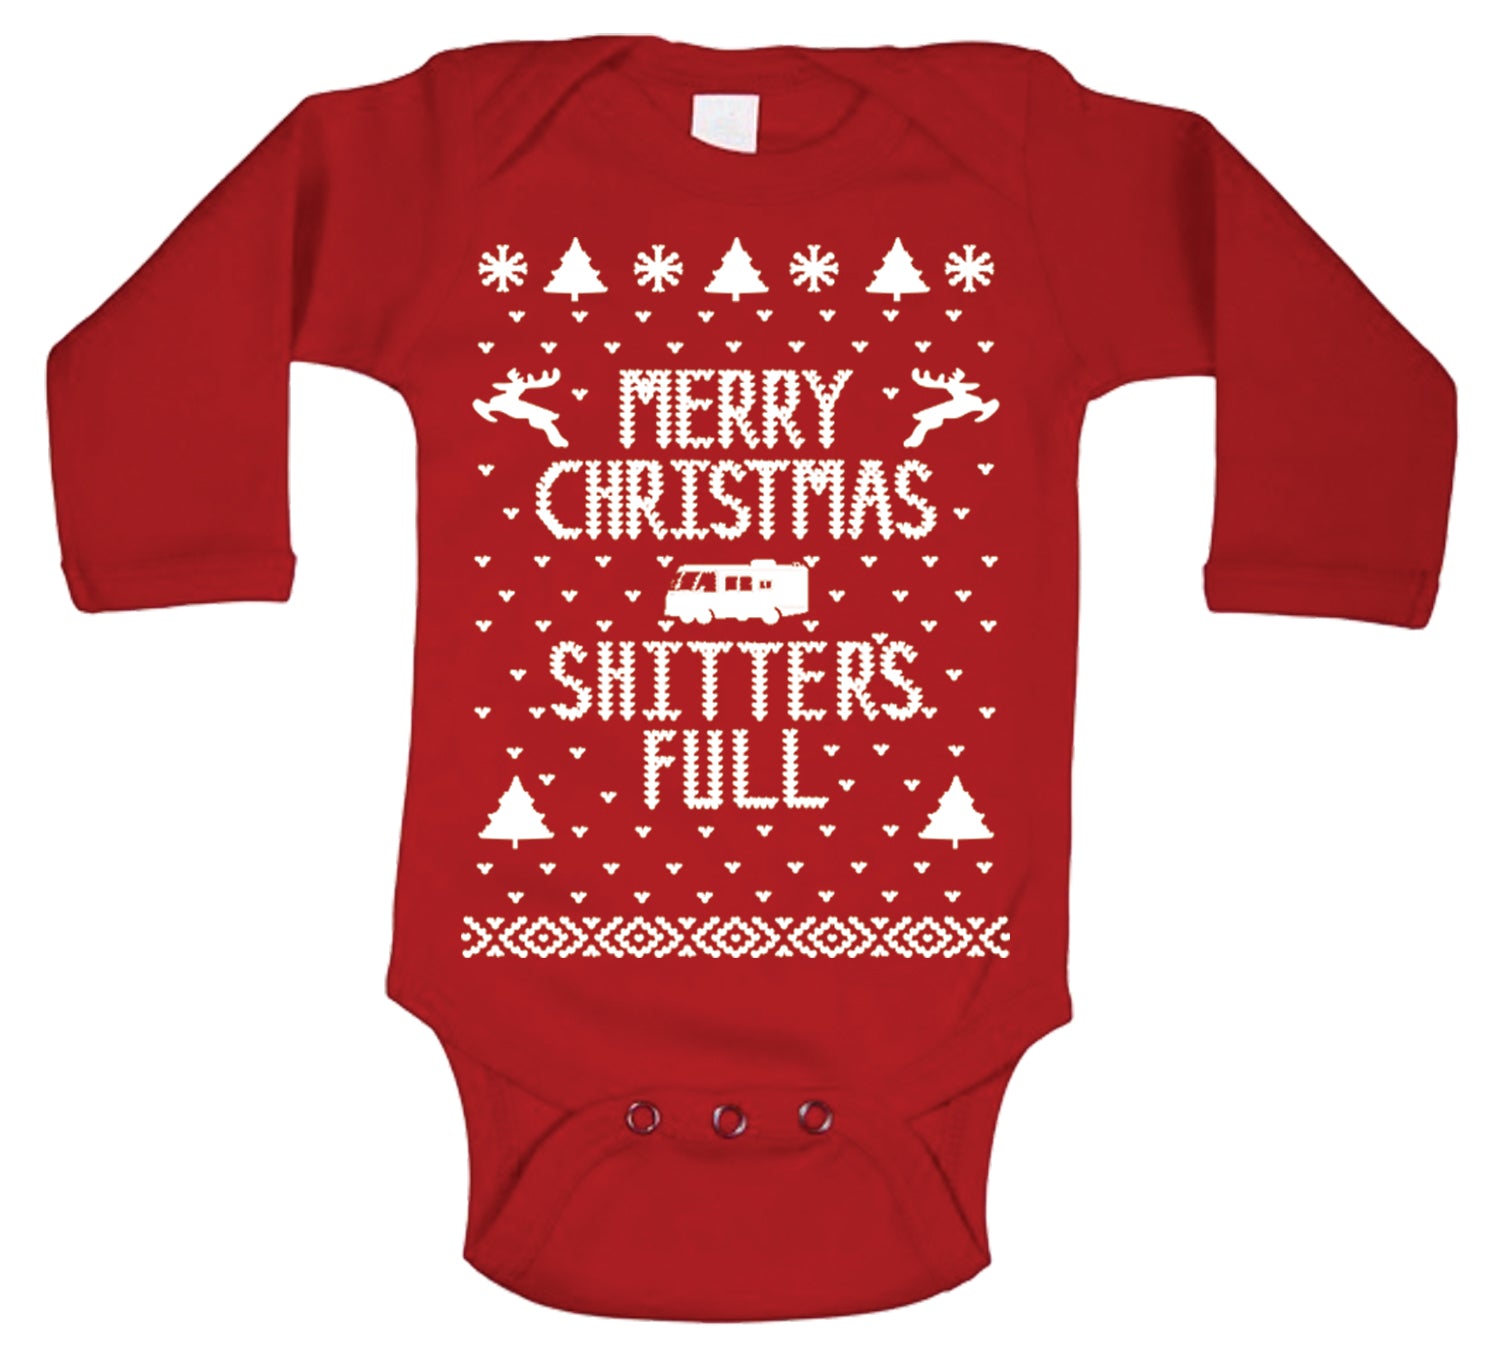 Merry Christmas Shitters Full Baby Tshirt - Donkey Tees